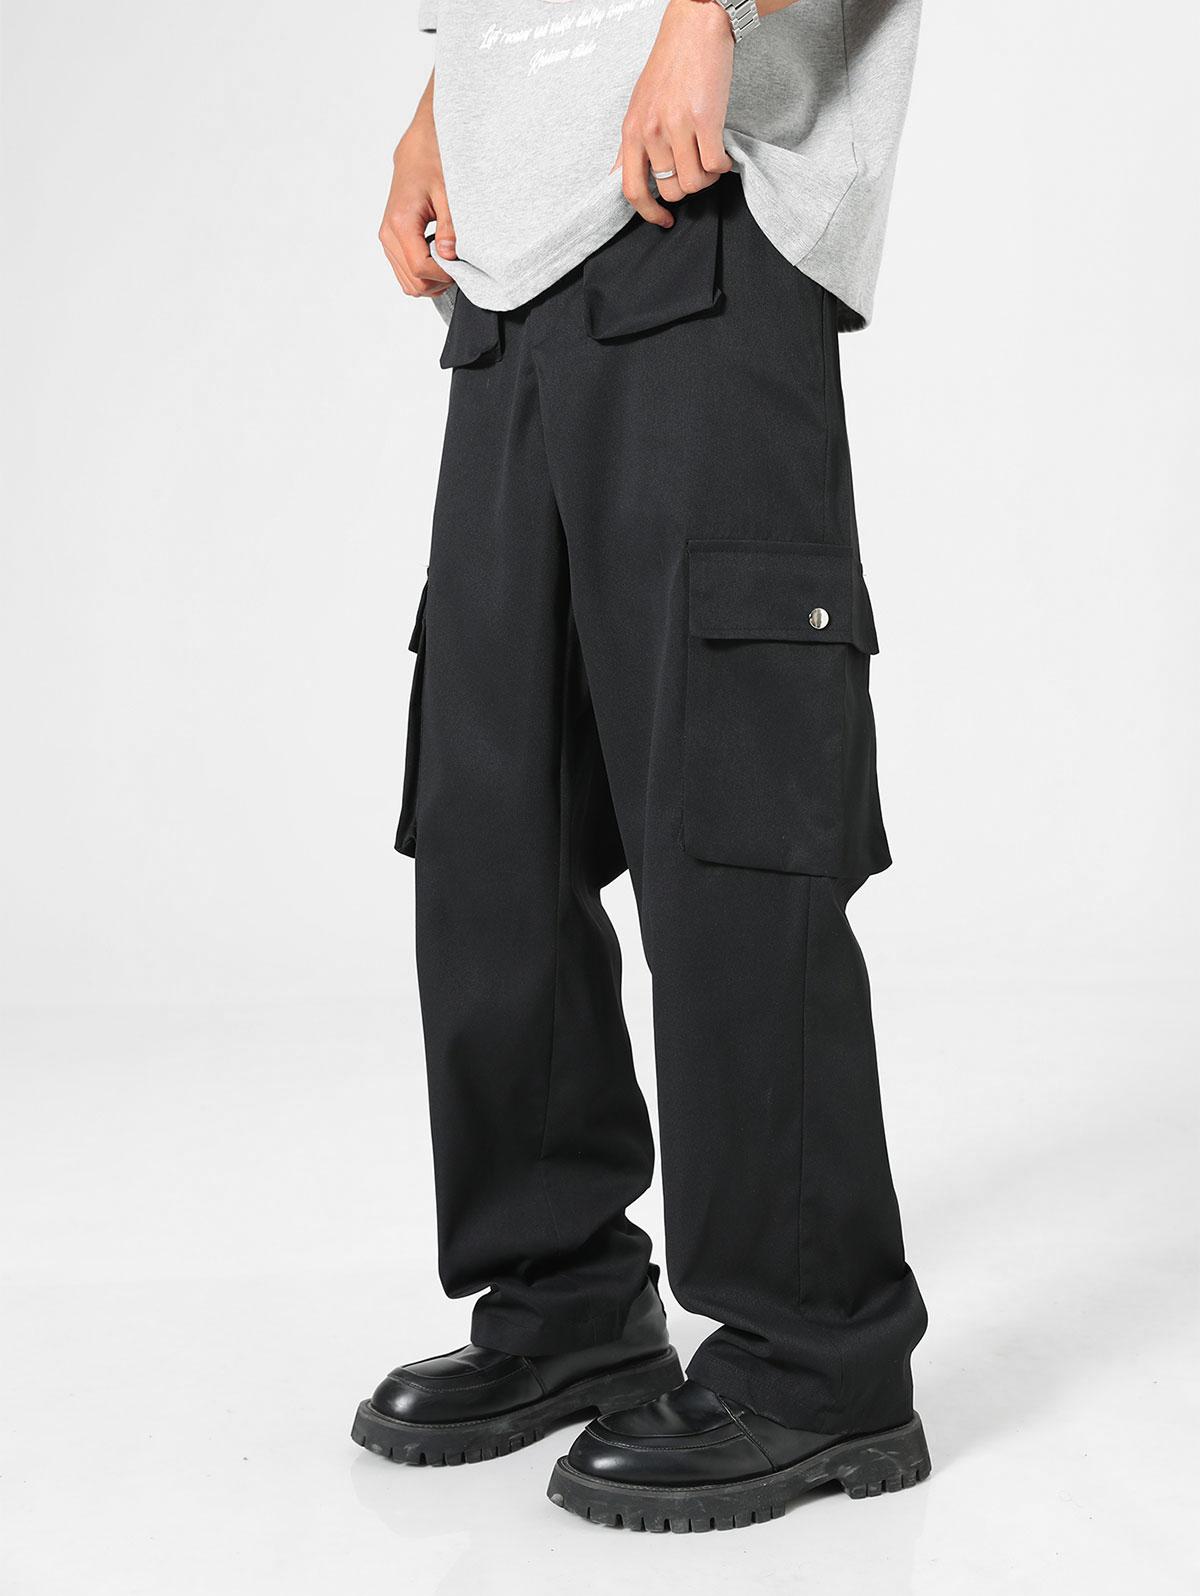 ZAFUL Men's Flap Pocket Design Cargo Pants L Black